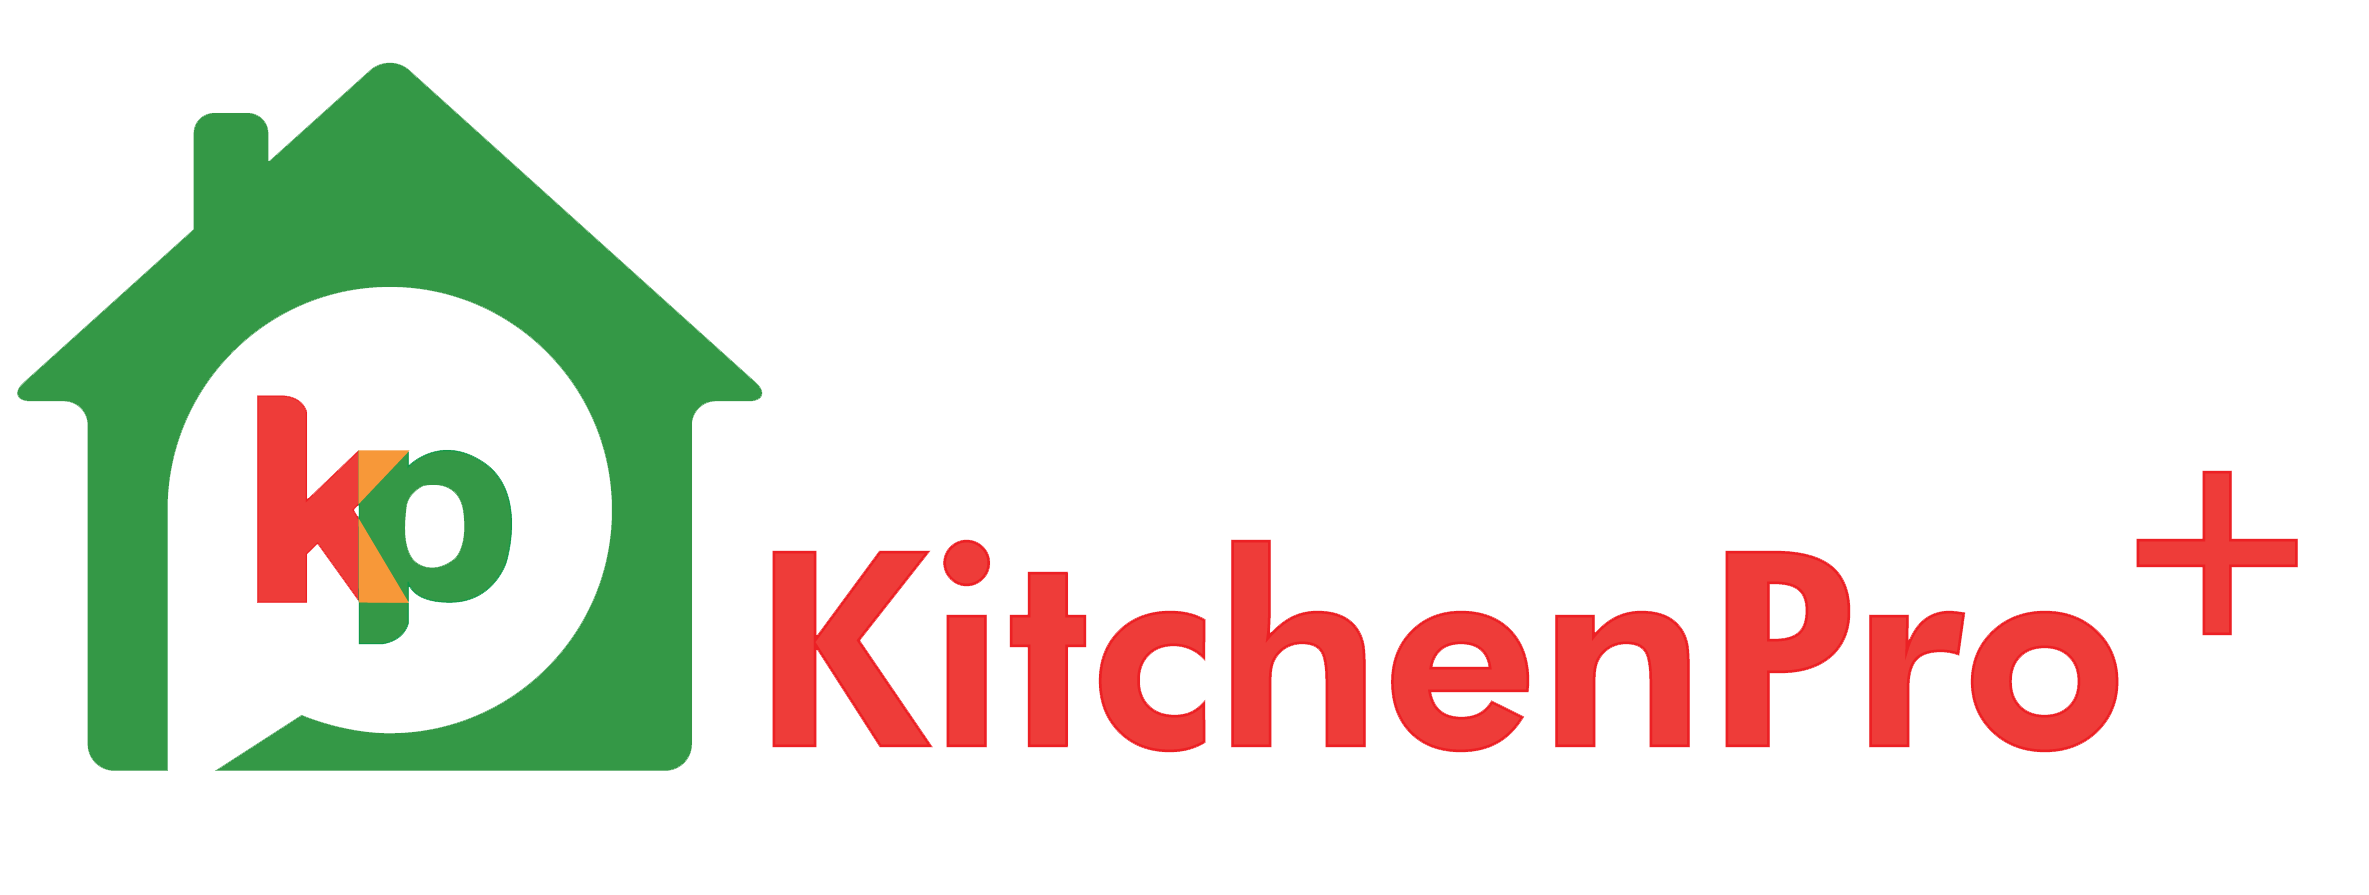 Logo Kitchen Pro Plus - chính sách bảo hành